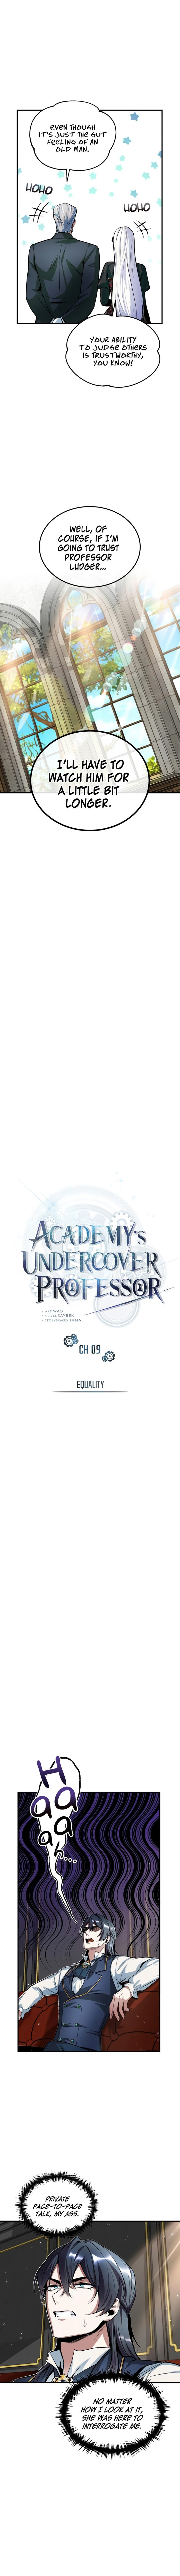 academys-undercover-professor-chap-9-3